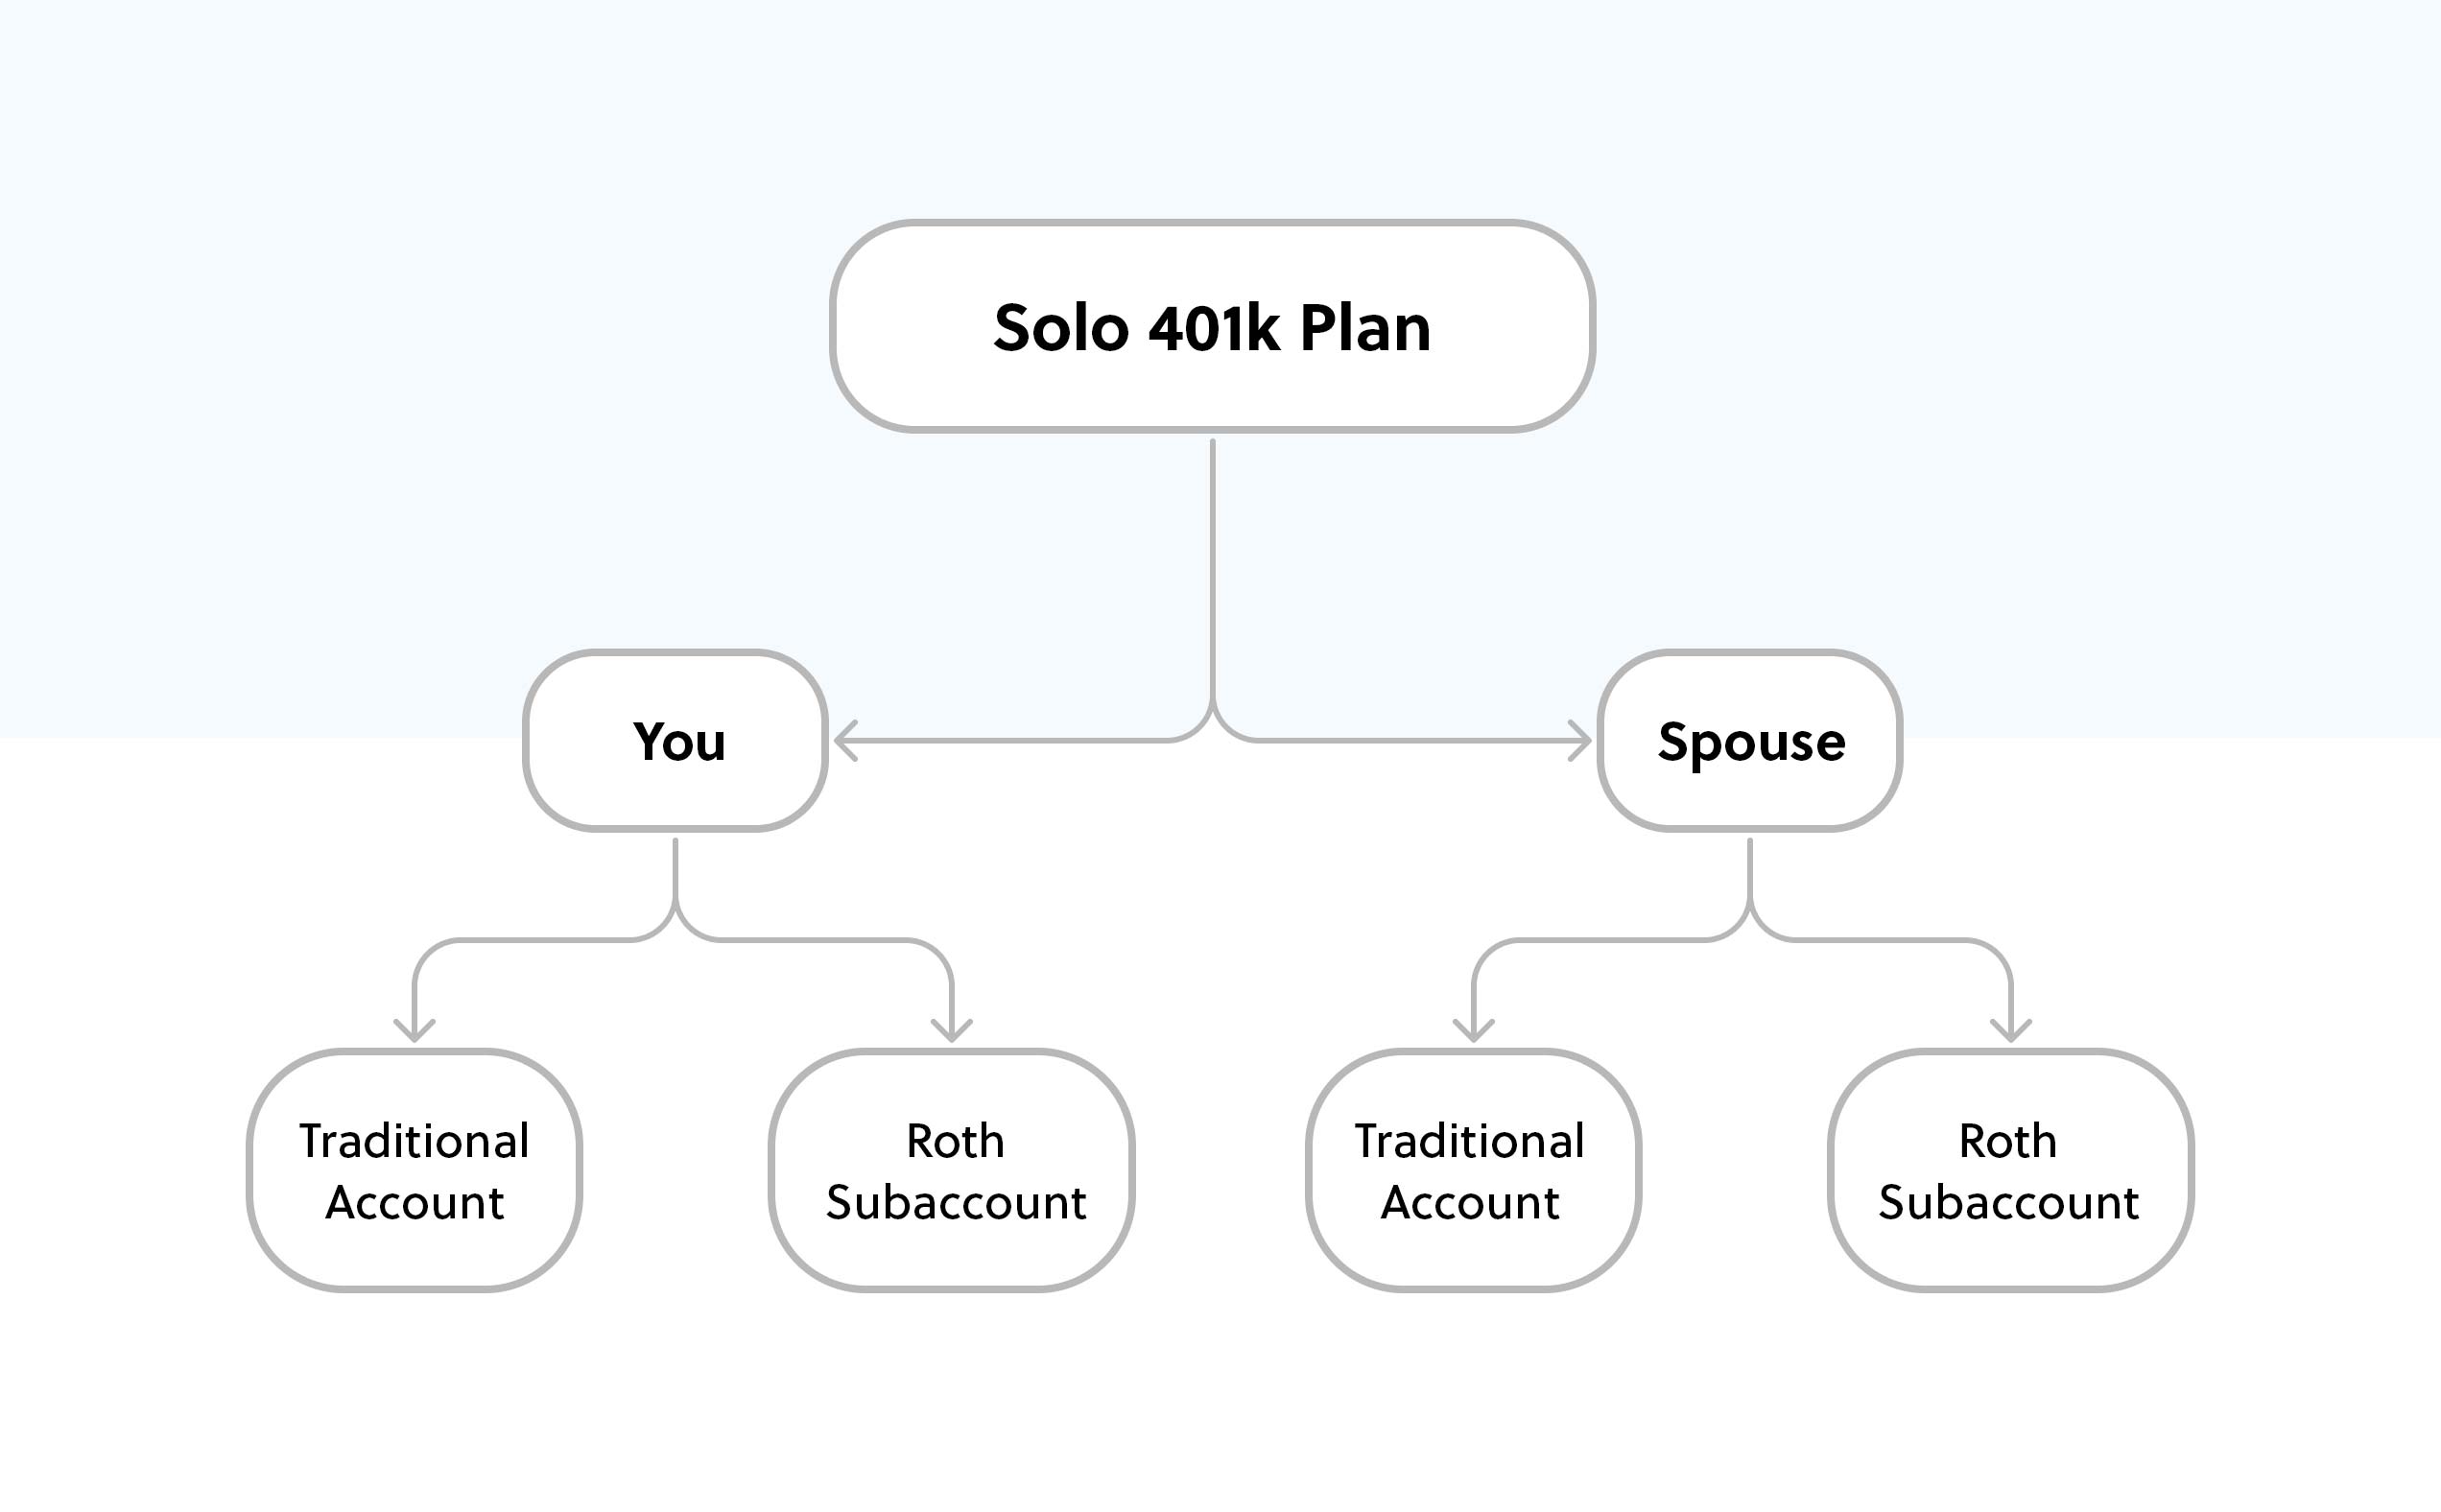 Solo 401k Spouse Account